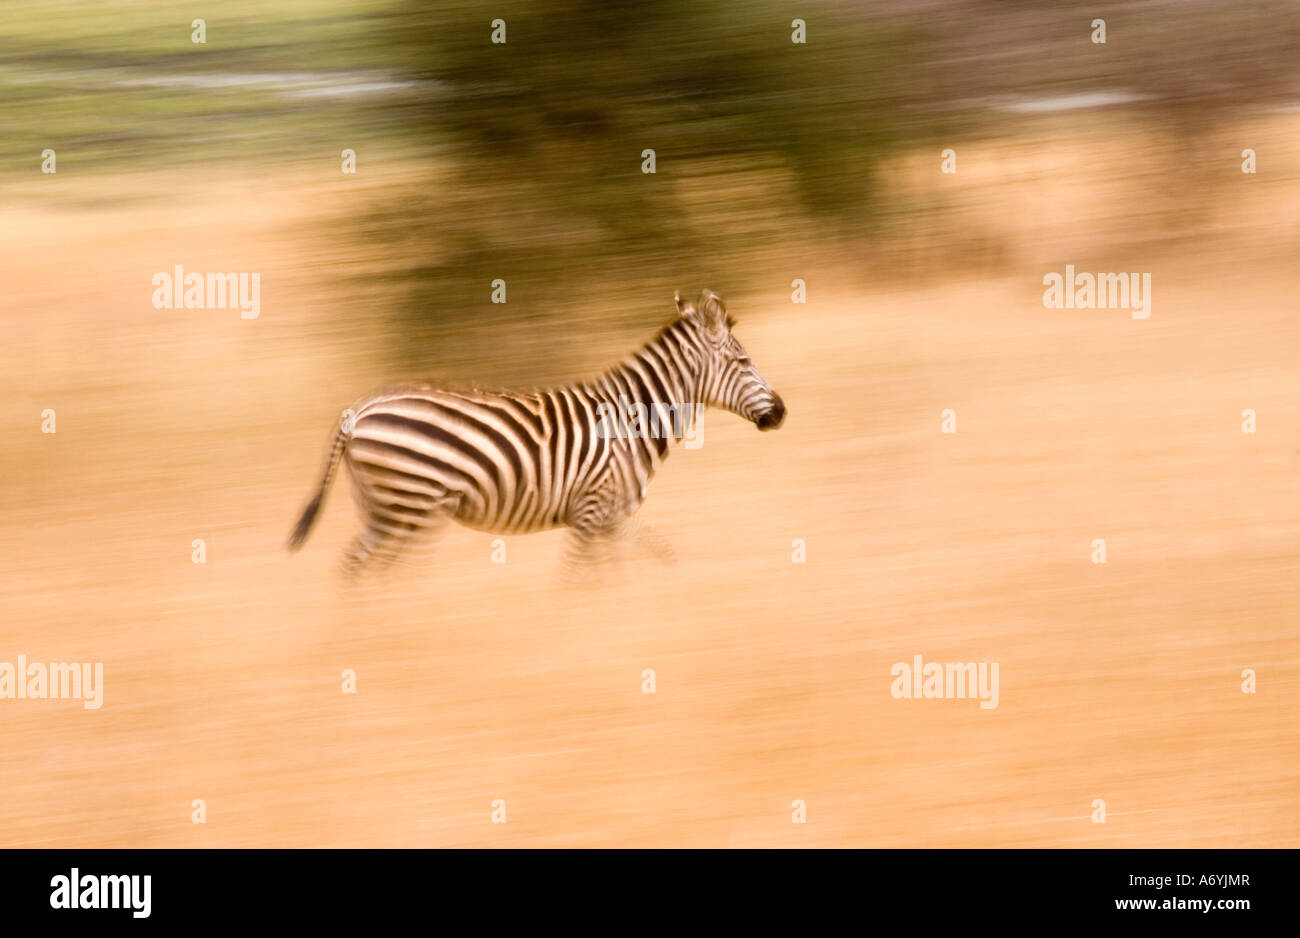 A zebra running Stock Photo